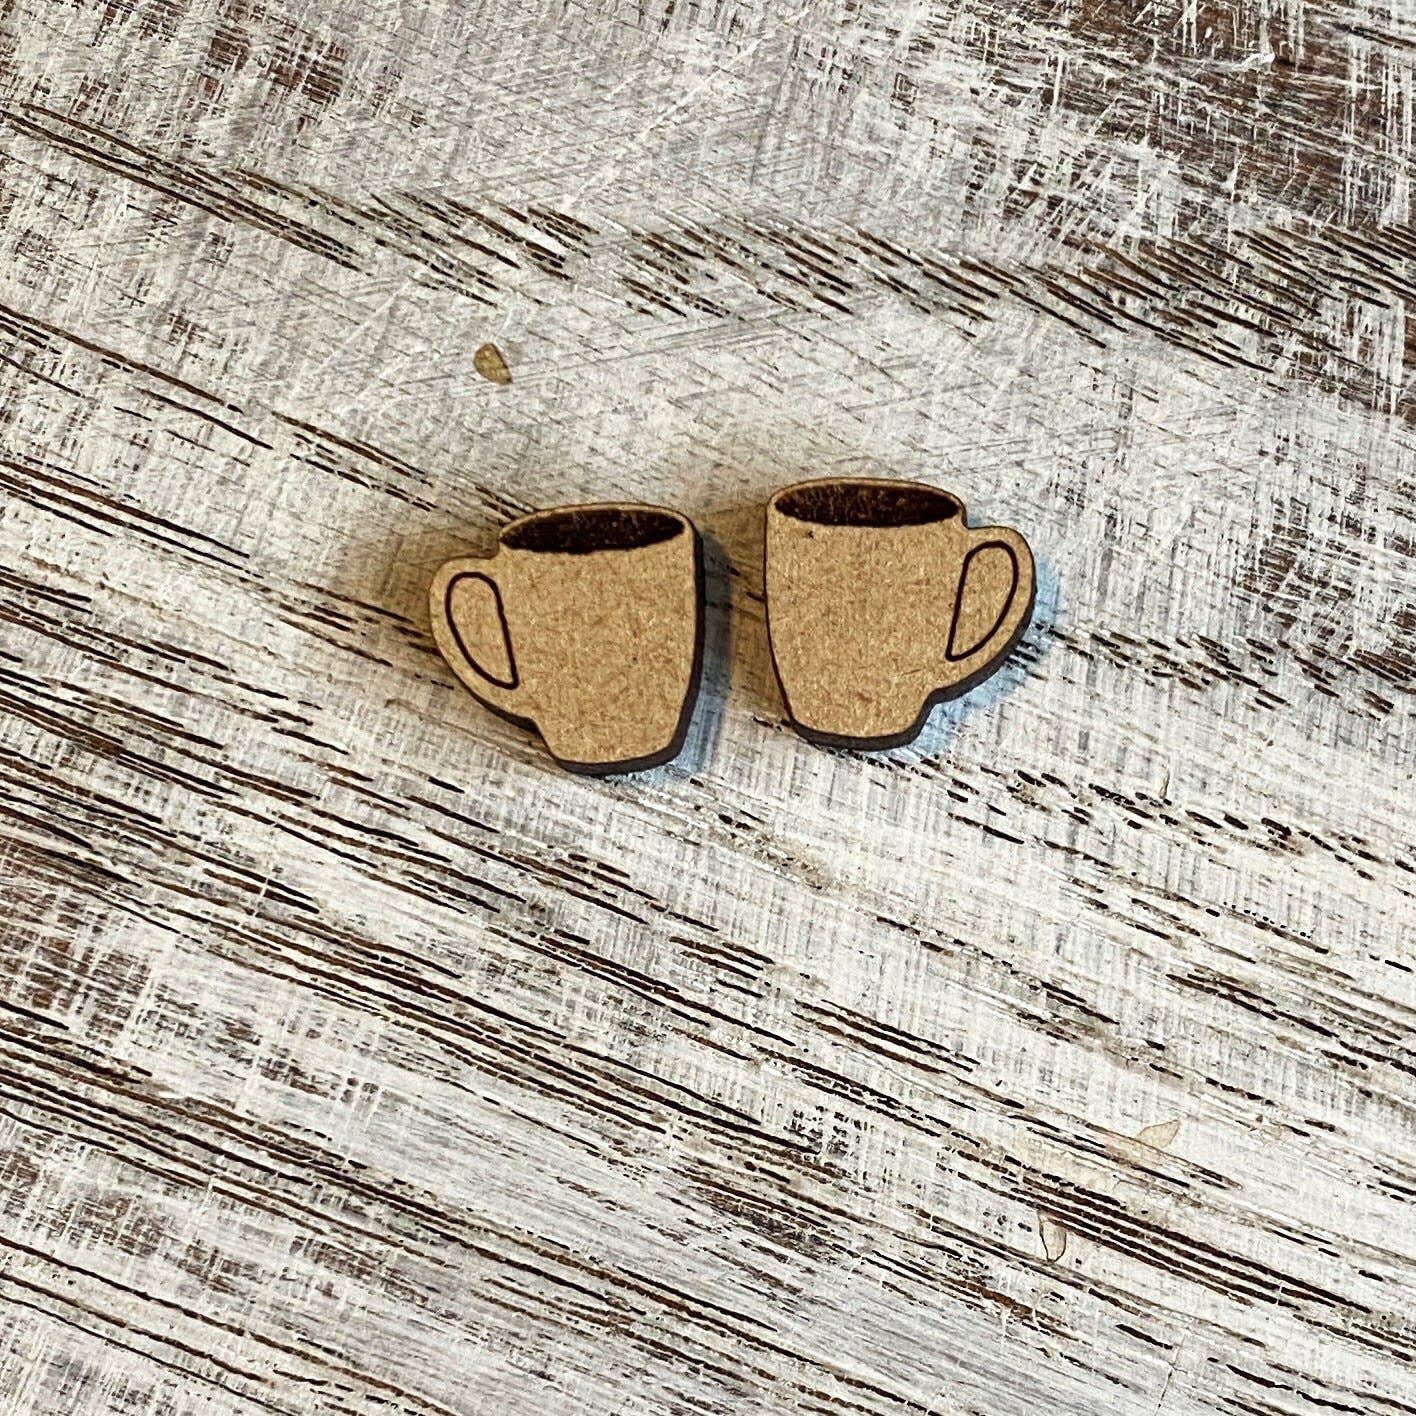 Coffee Mug Stud earrings